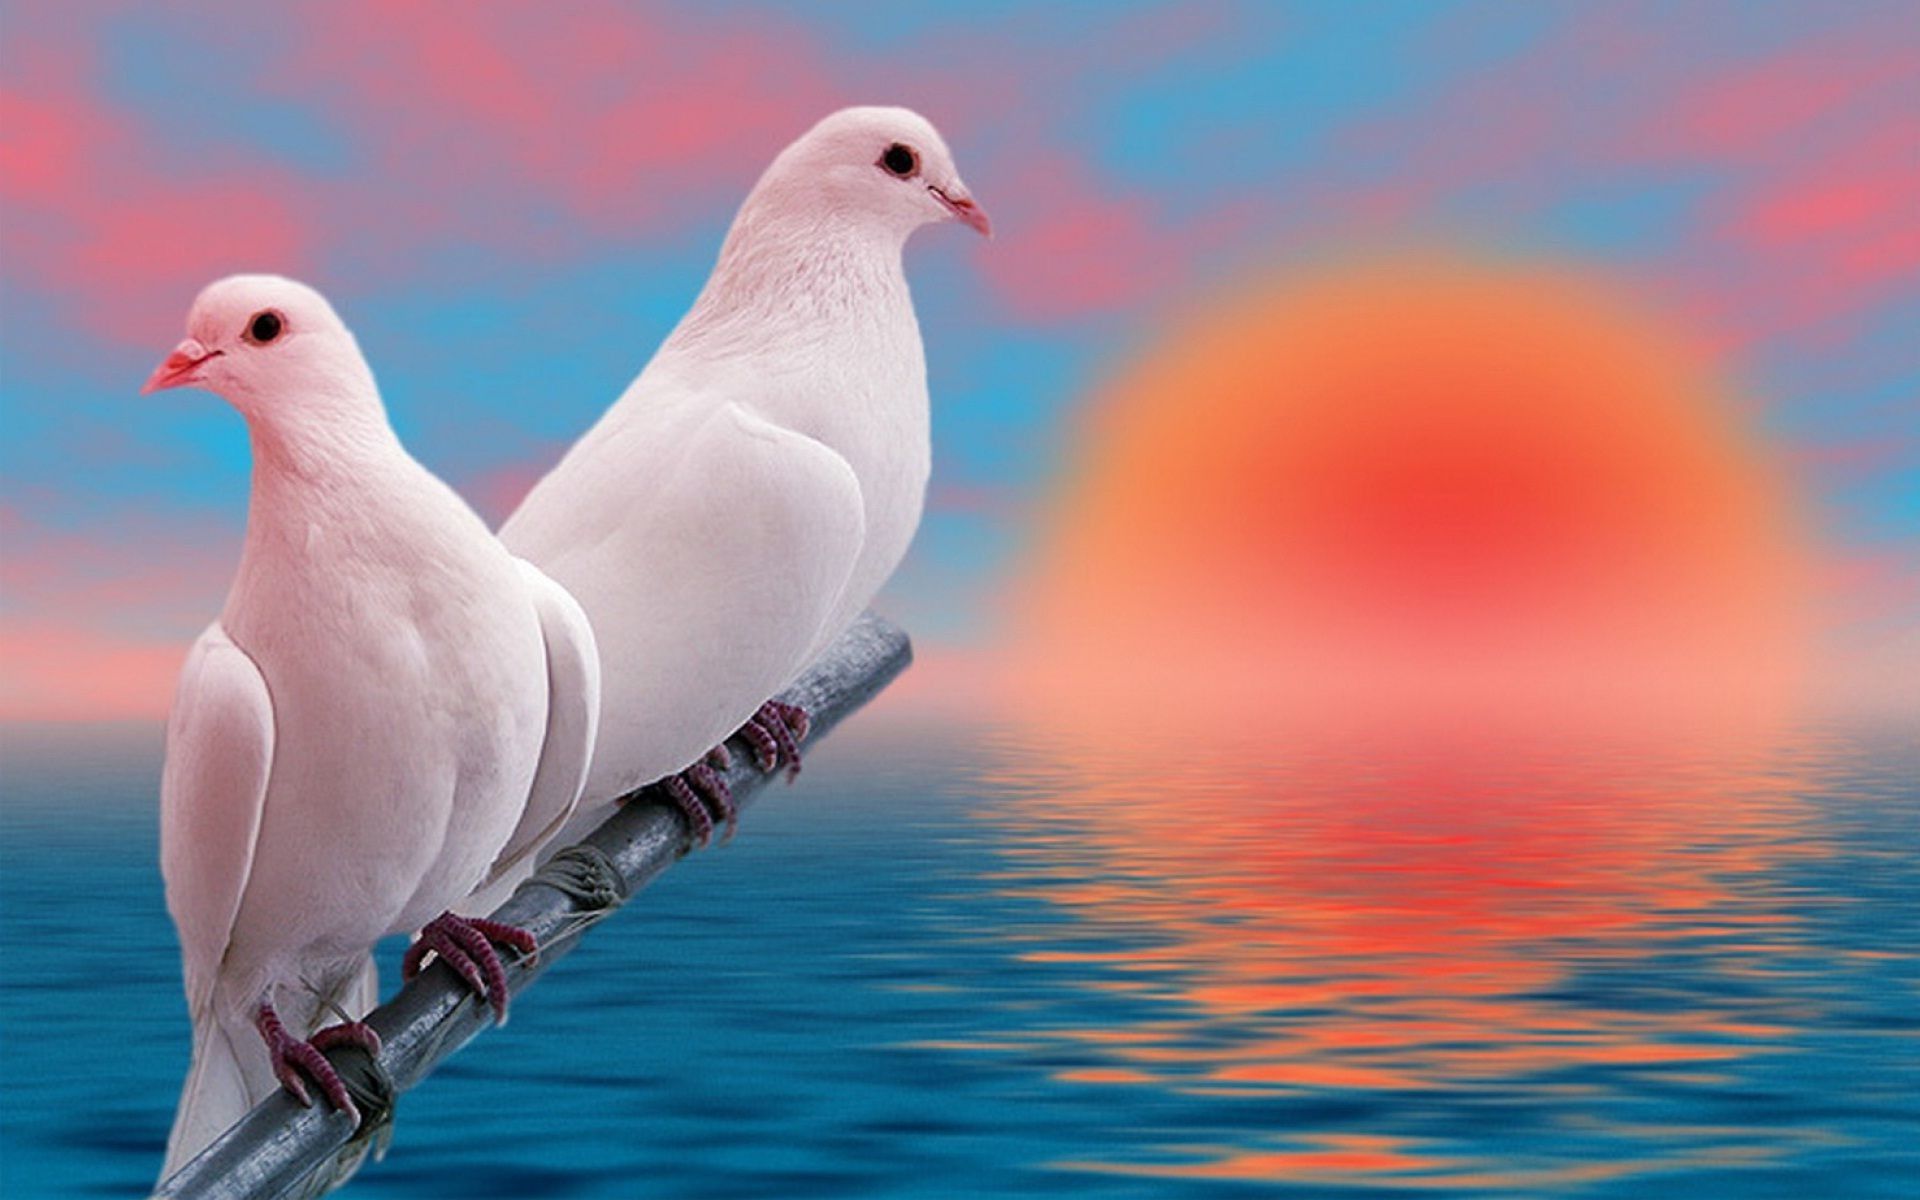 Love Birds  Fantasy  Abstract Background Wallpapers on Desktop Nexus  Image 2487259